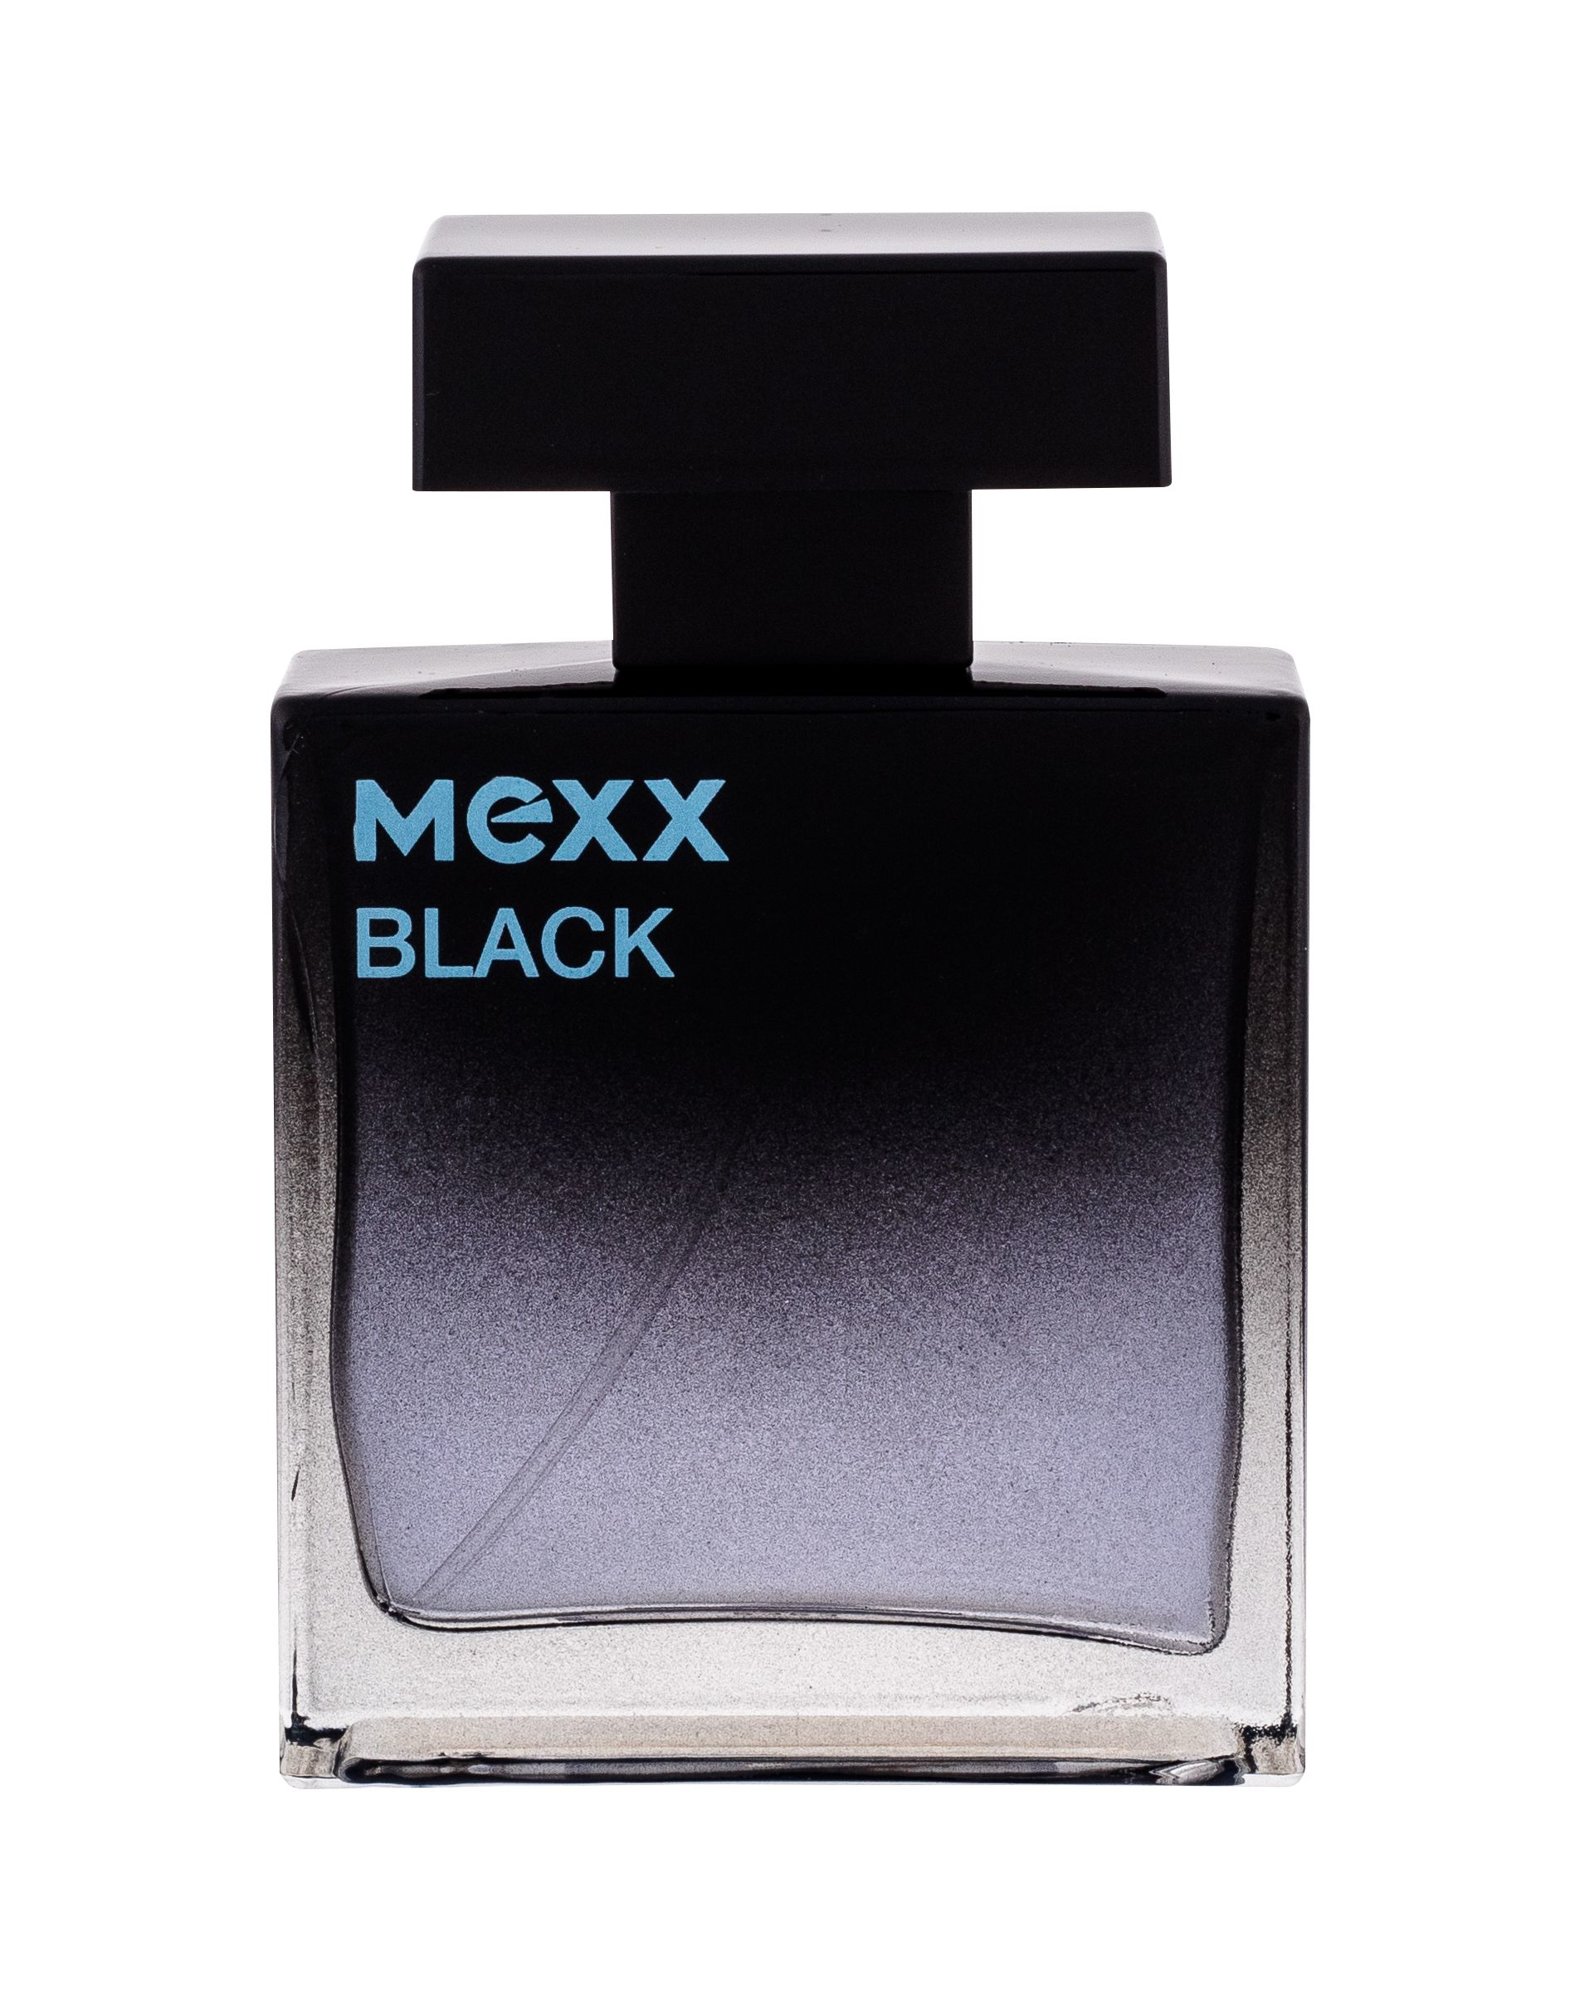 Mexx Black 50ml vanduo po skutimosi